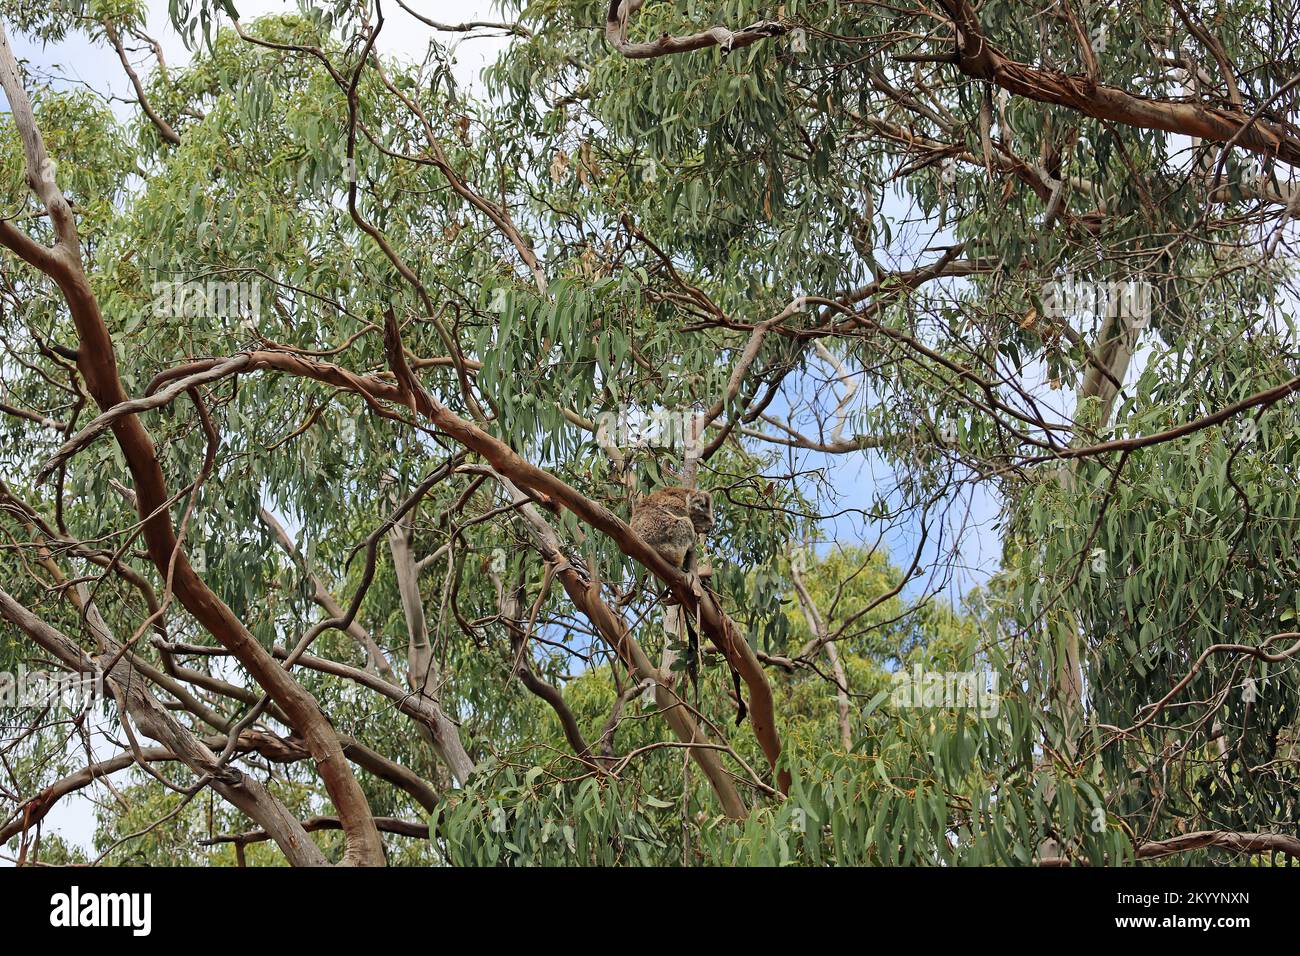 Wild koala in eucalyptus forest - Australia Stock Photo